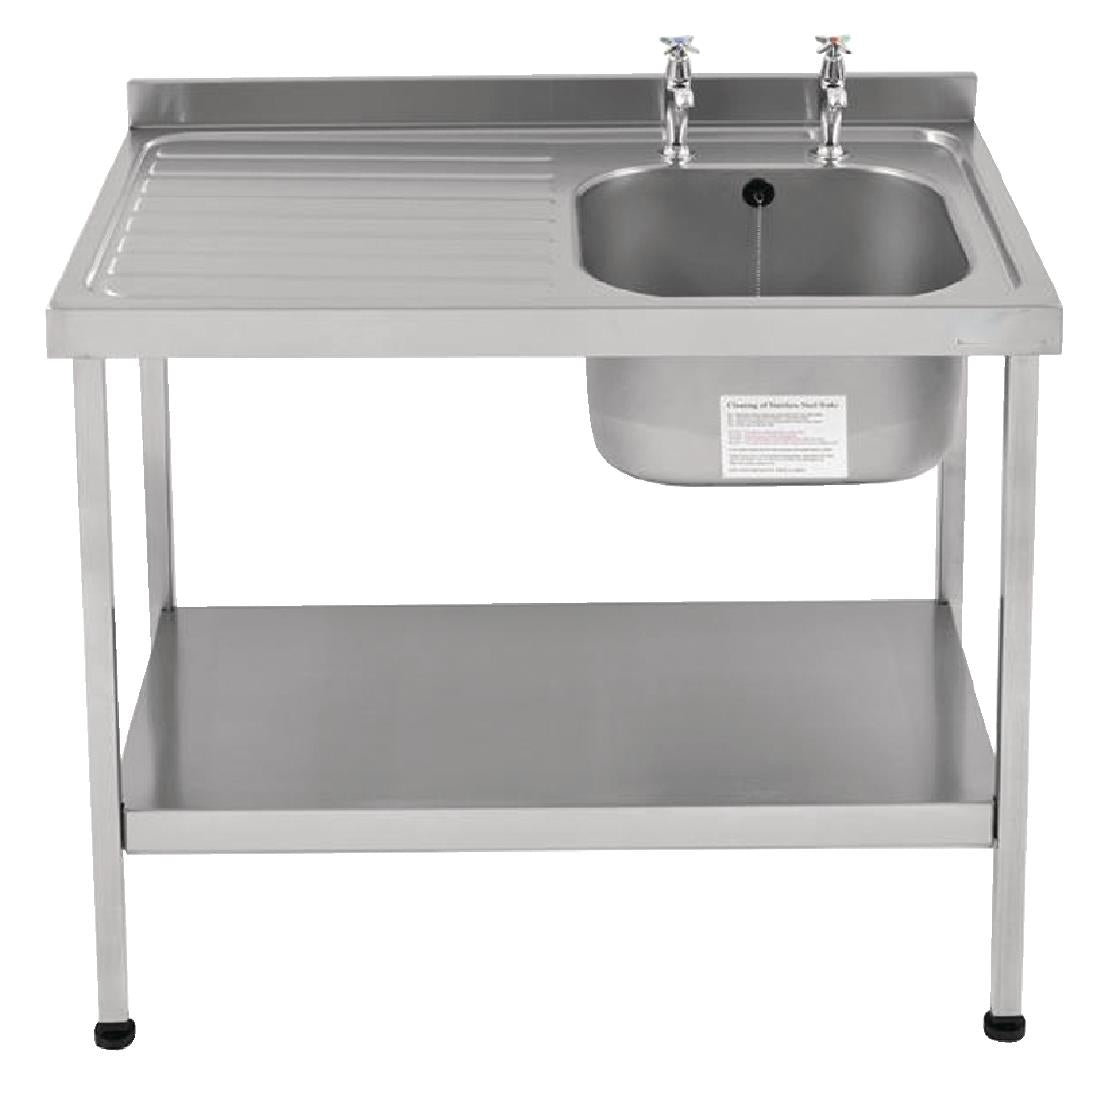 Franke Sissons Self Assembly Stainless Steel Sink Left Hand Drainer 1200x600mm JD Catering Equipment Solutions Ltd